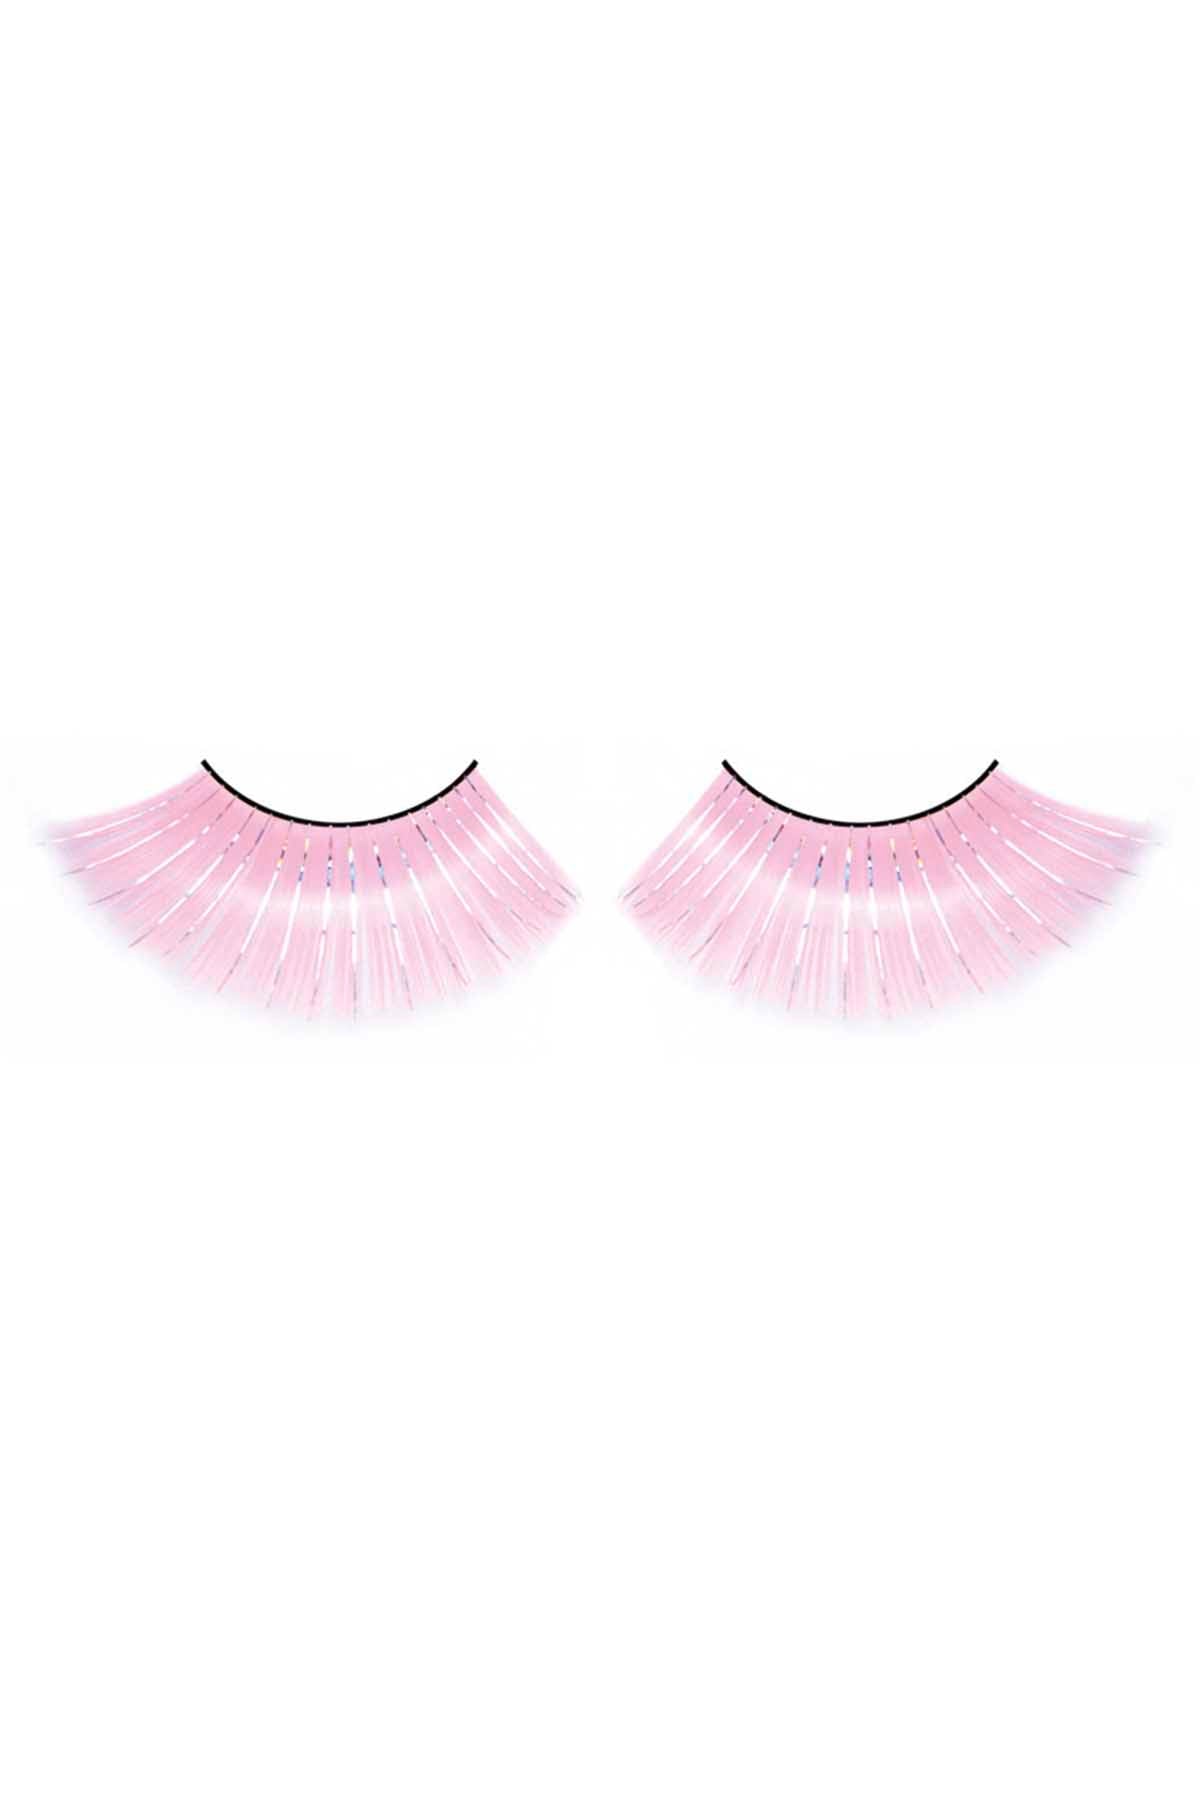 Baci Pink Glitter Magic Colors Eyelashes